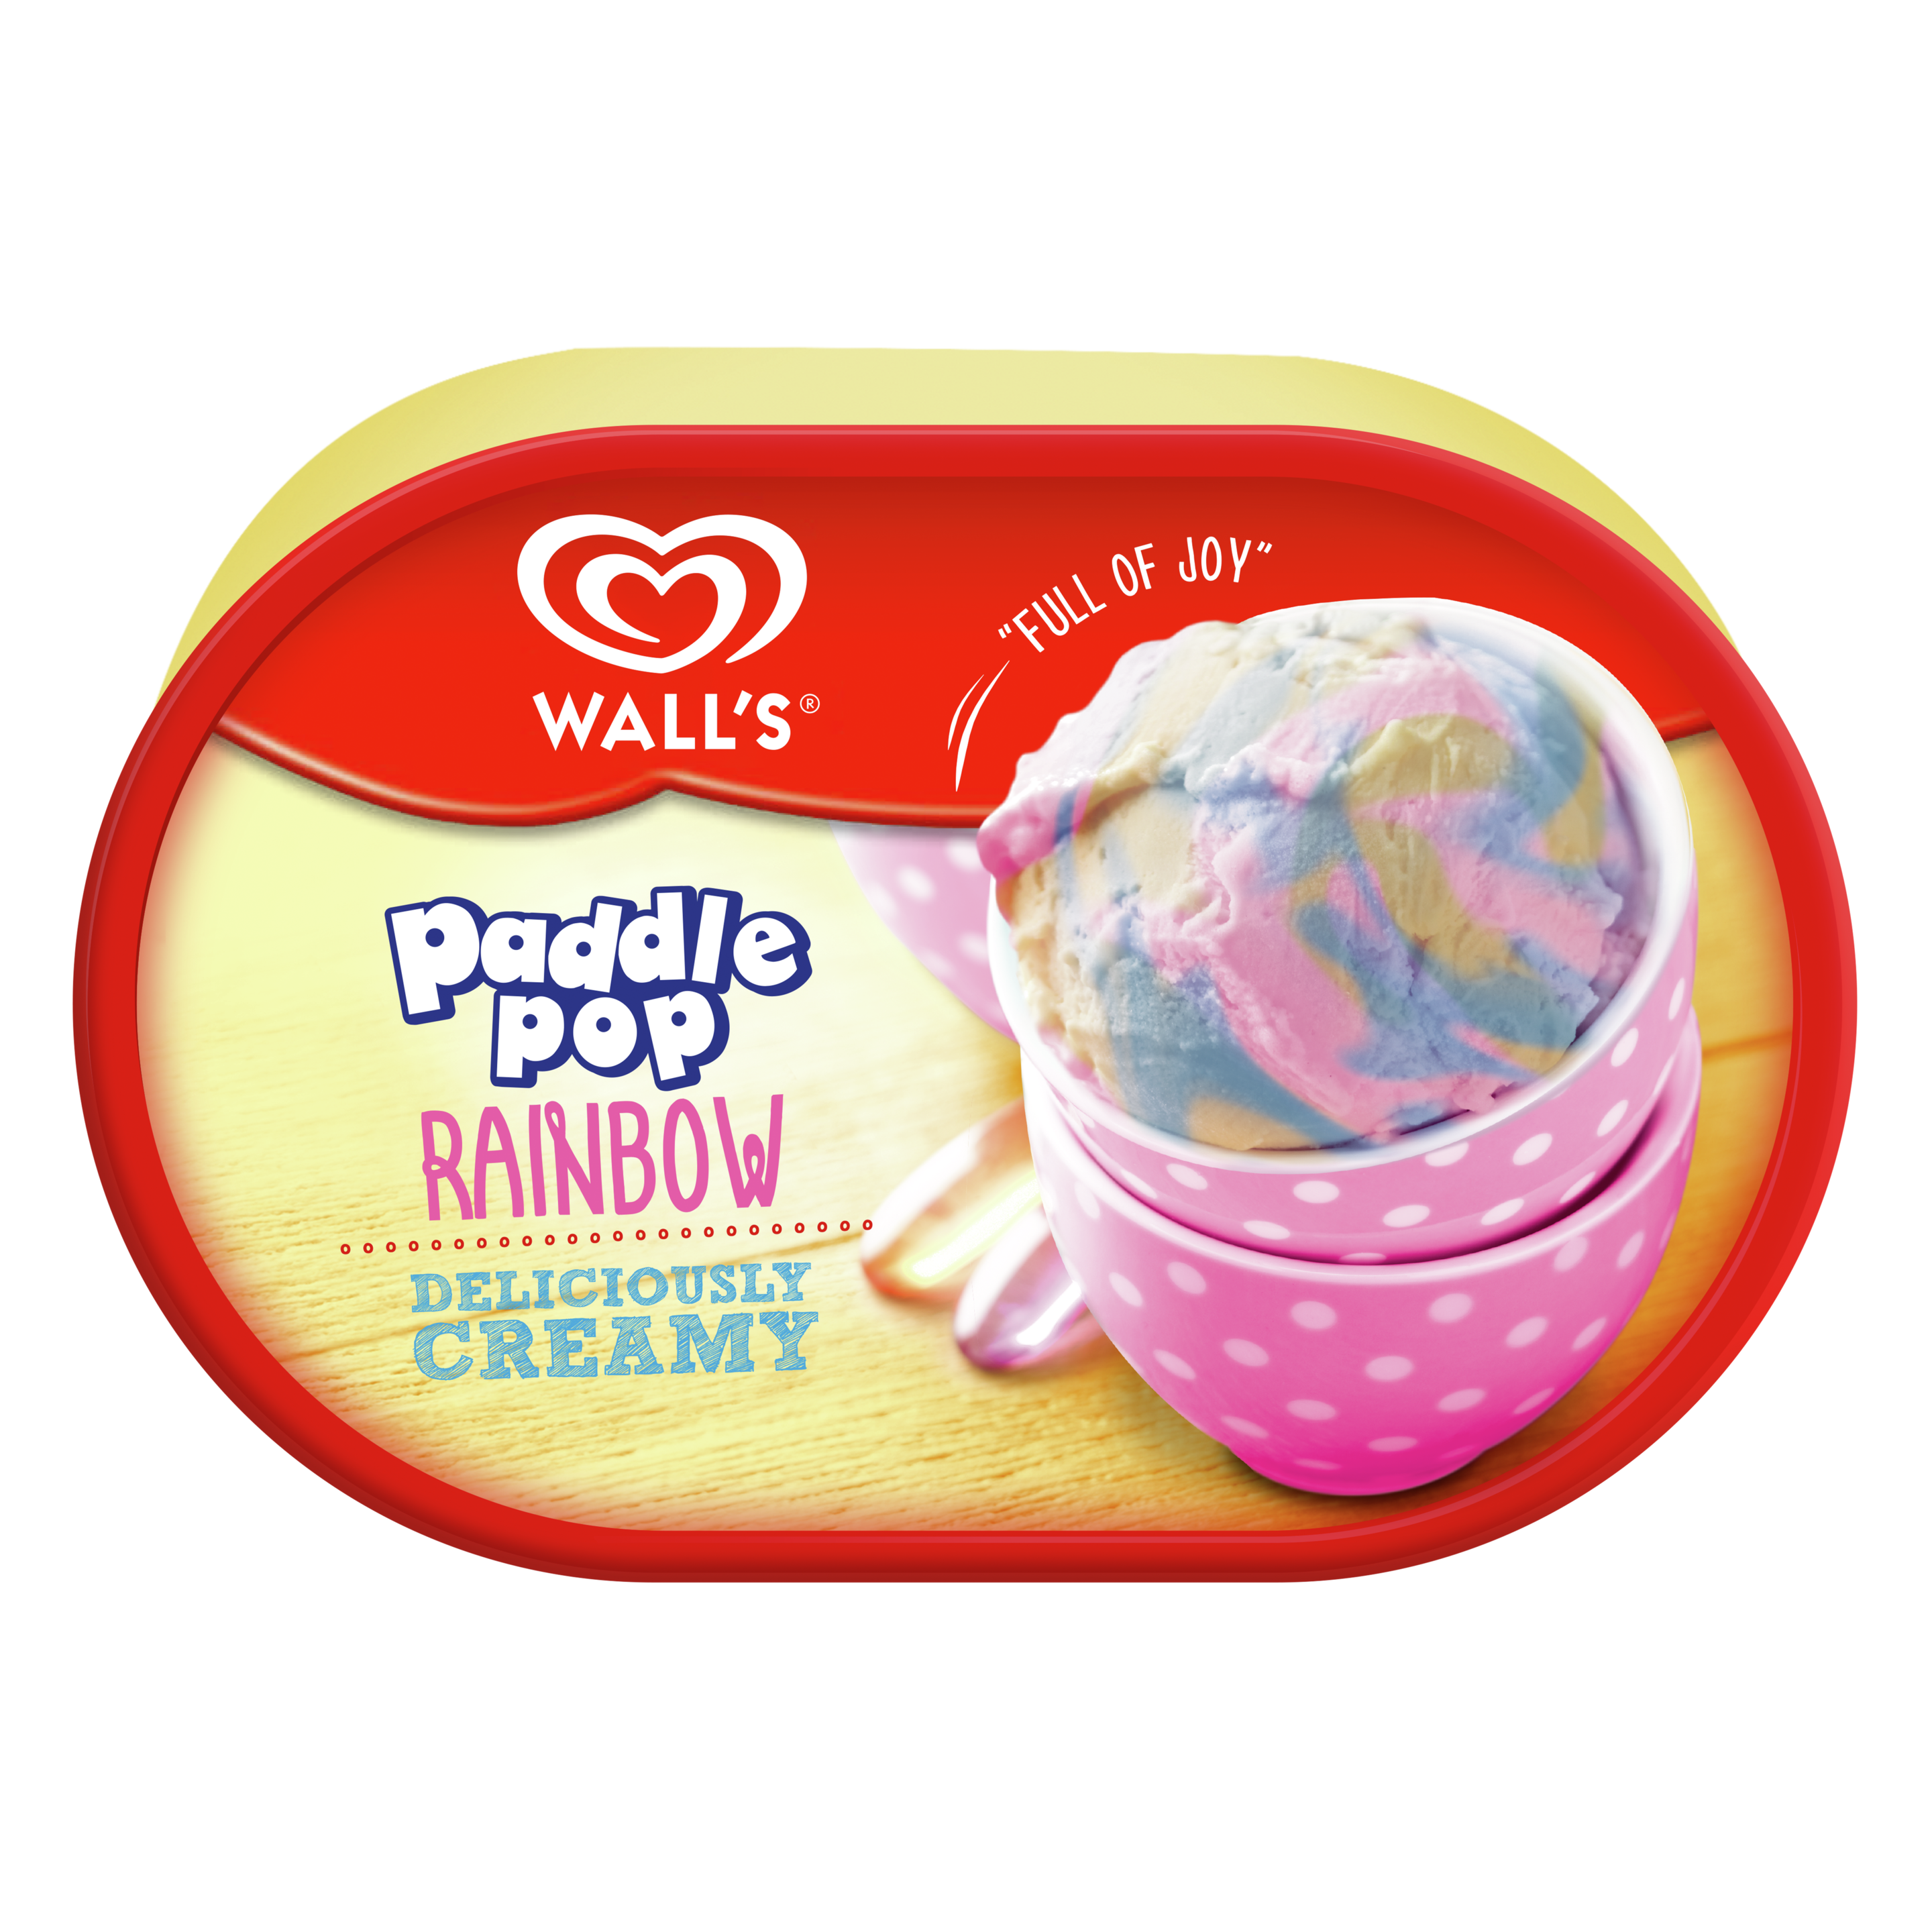 Wall's Paddle Pop Rainbow